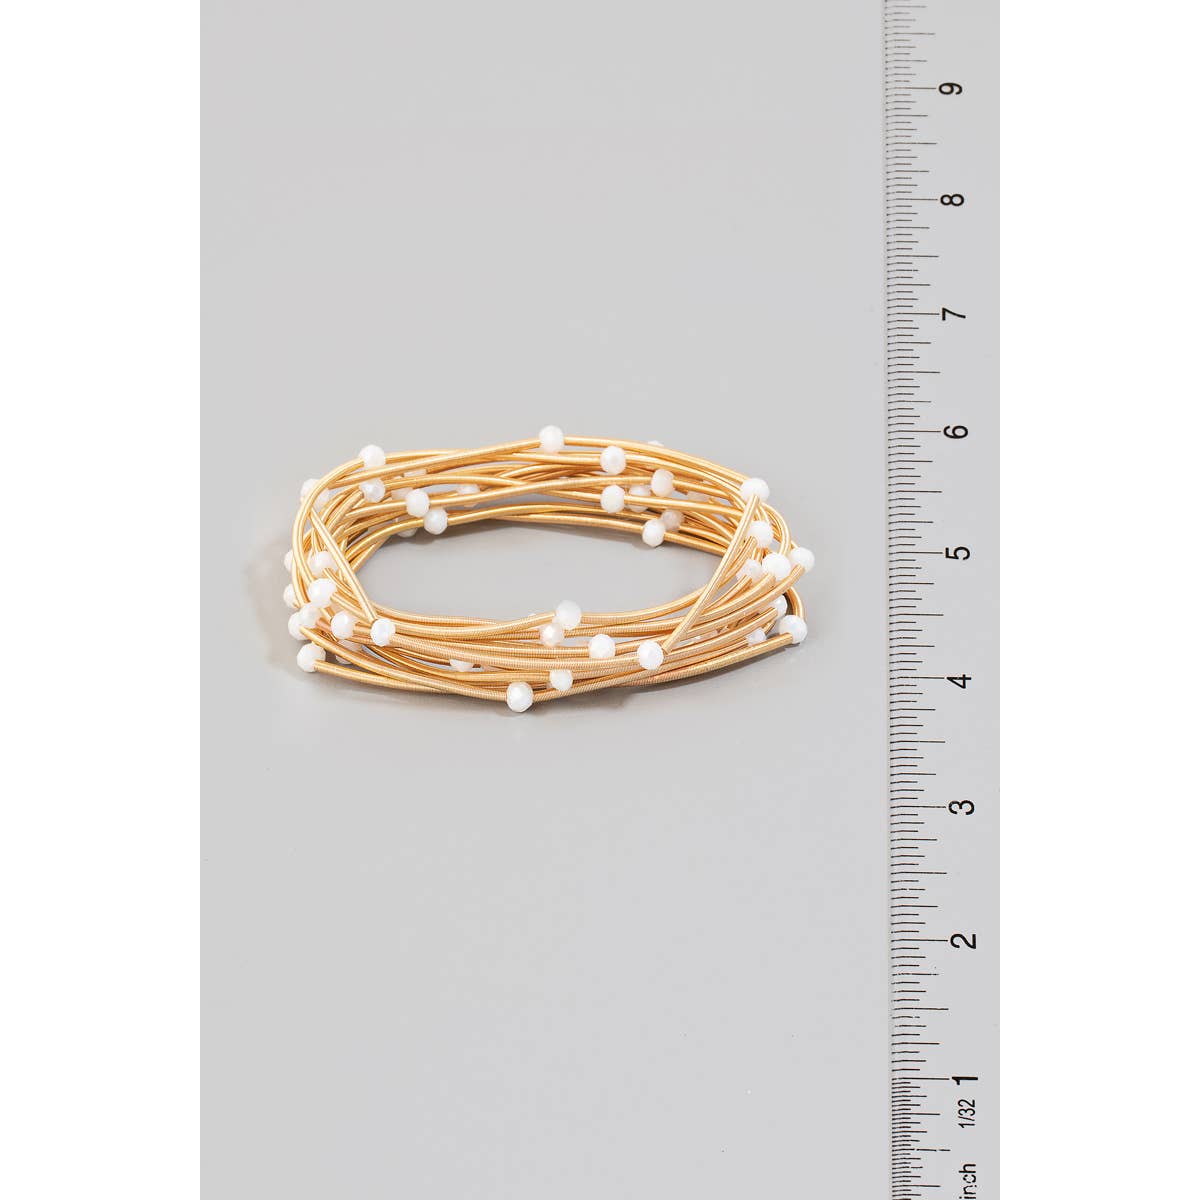 Rhinestone Beads And Coils Bracelet Set: Mint